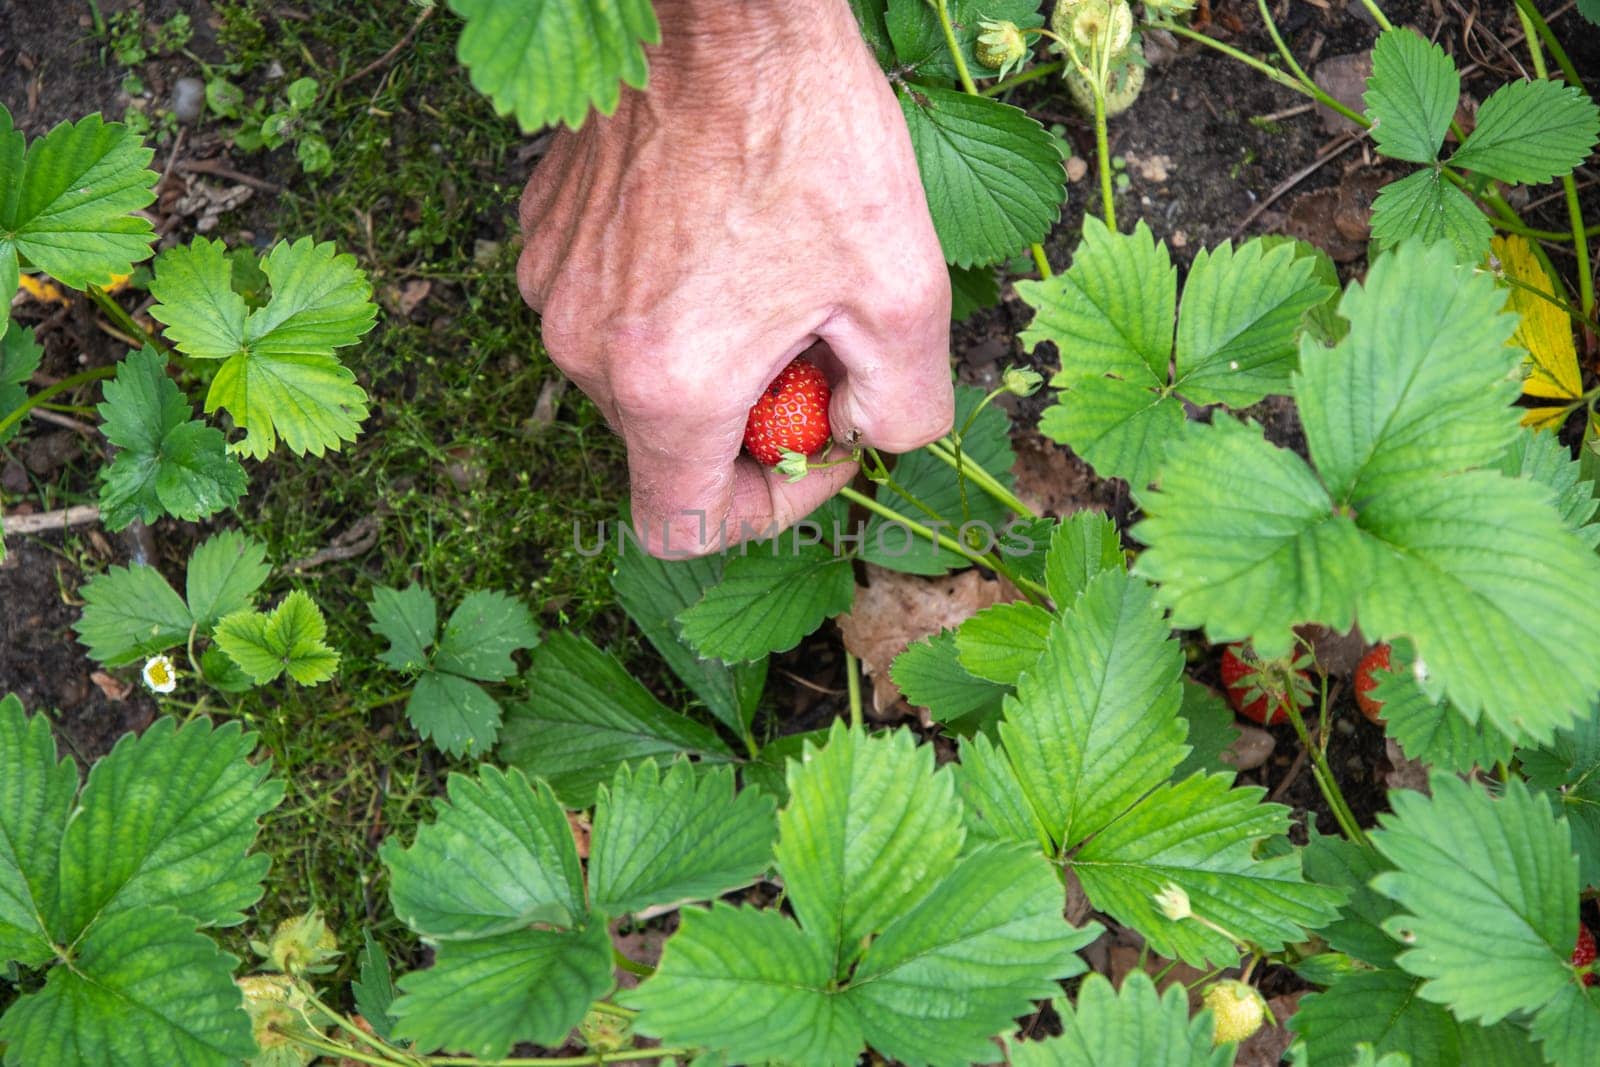 man picks strawberries in his palm, a summer harvest of berries, fruit picking, by KaterinaDalemans